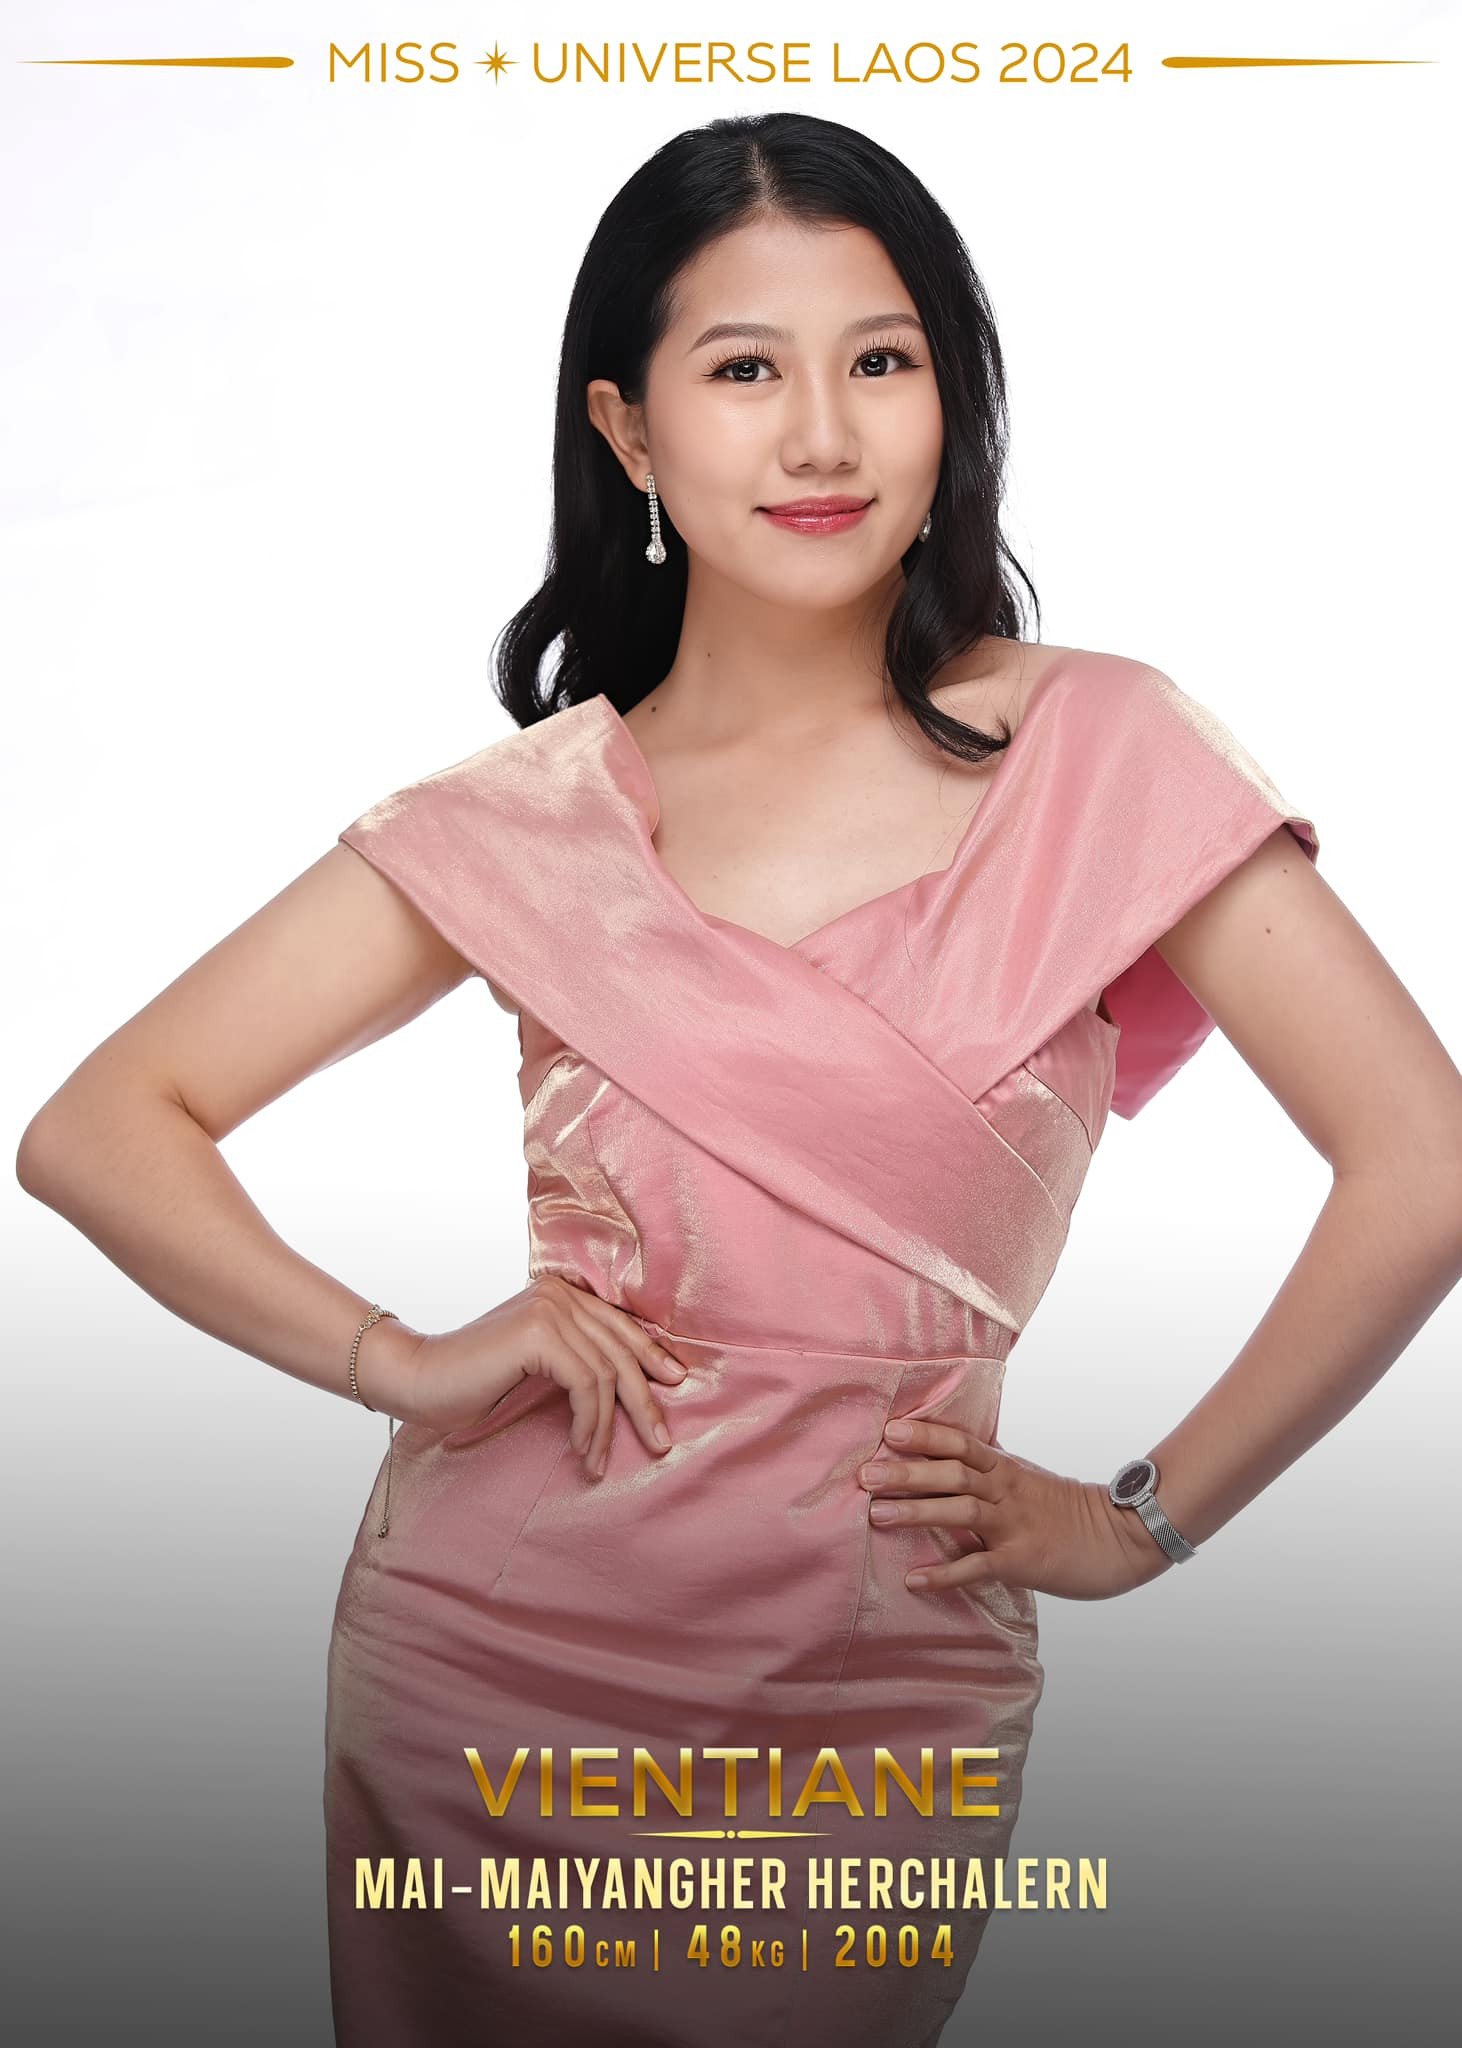 candidatas a miss universe laos 2024. final: ? - Página 2 JjGvKHQ